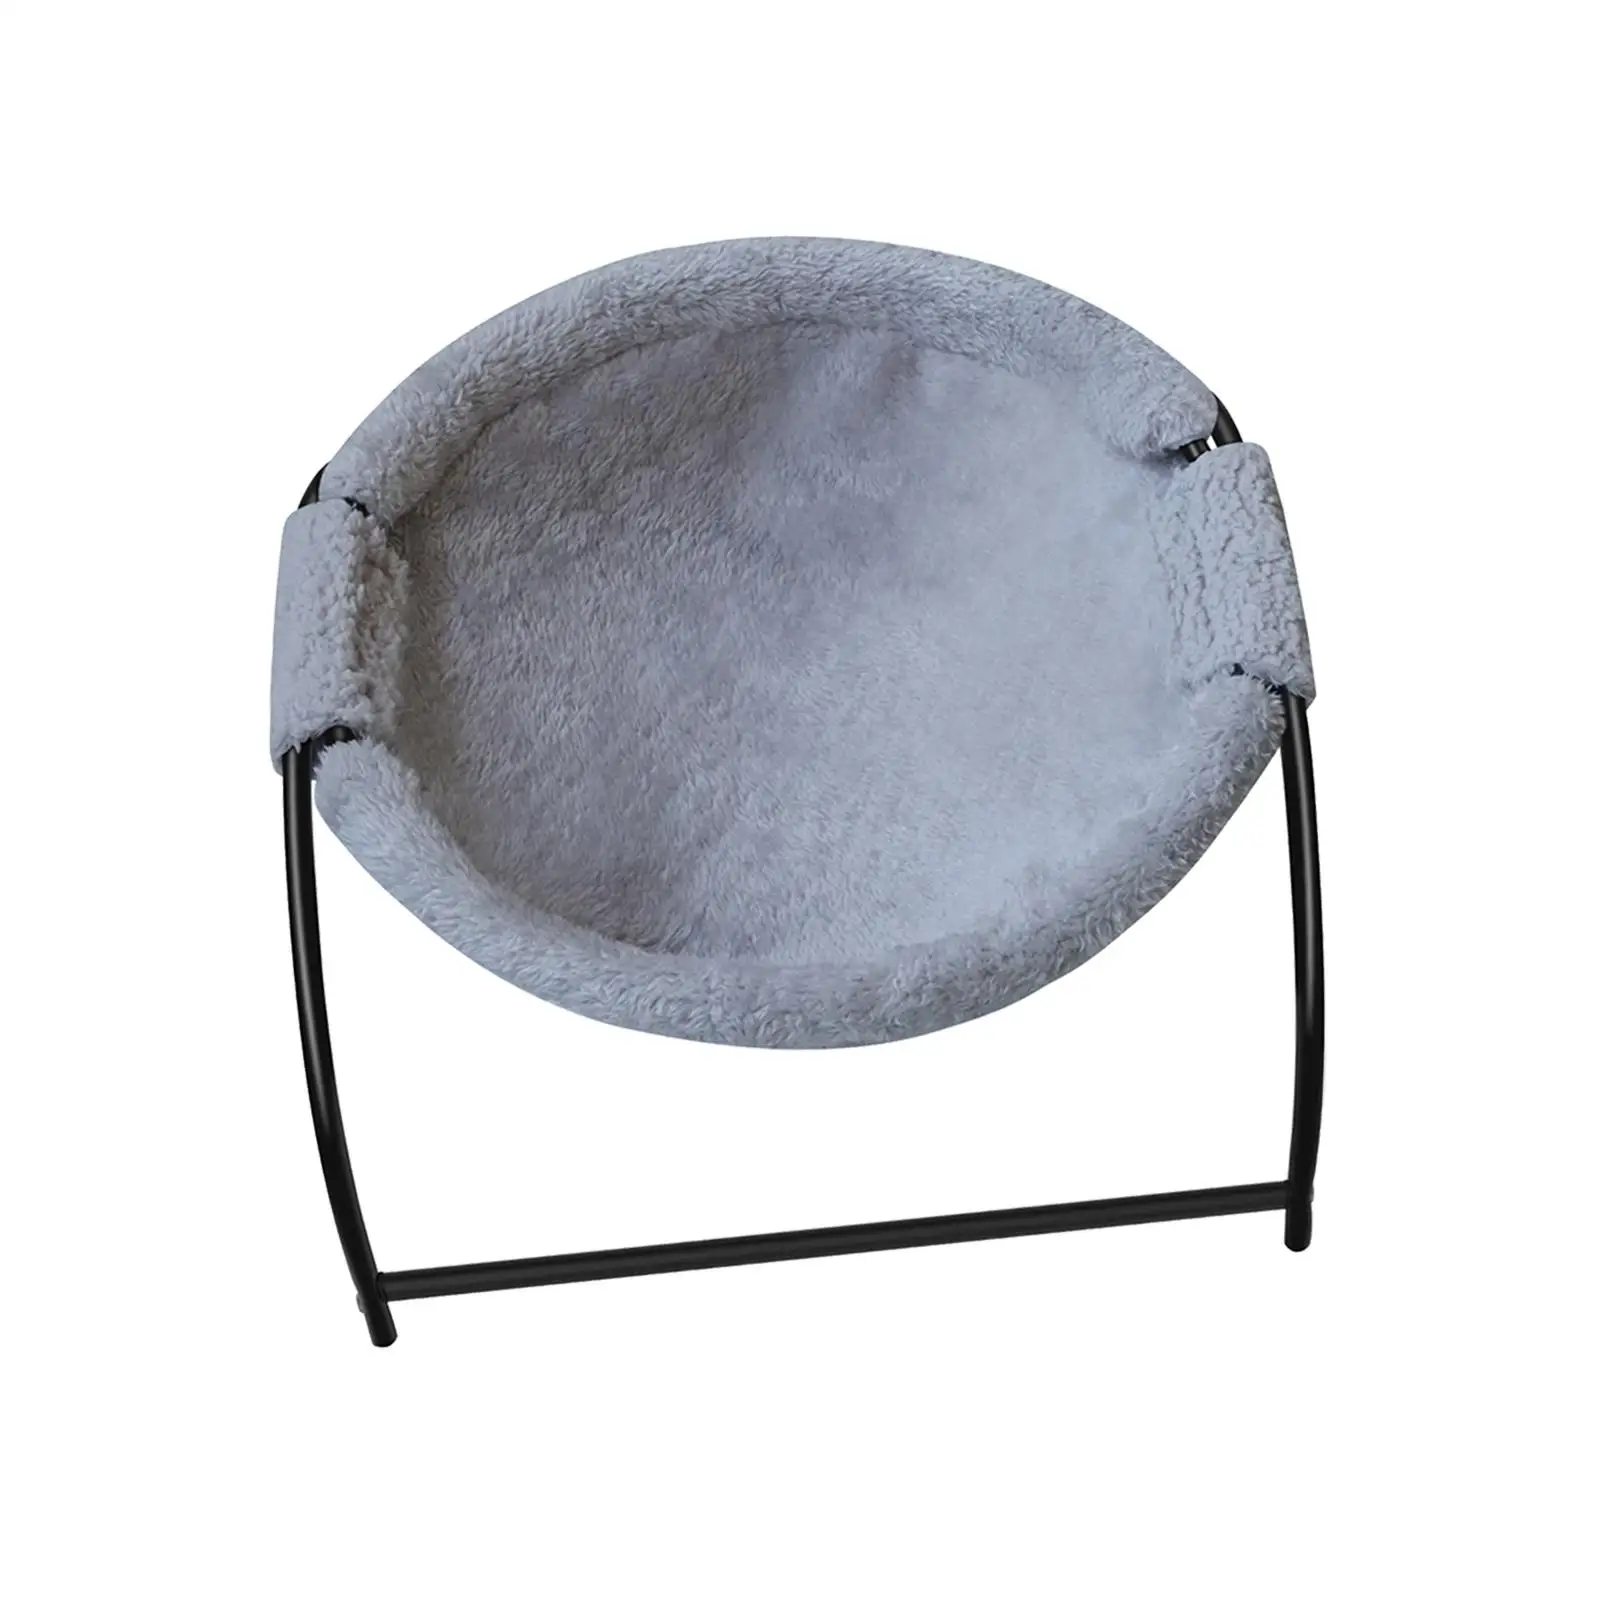 Comfortable Cat Hammock Dog Sleeping Bed Washable Detachable Stable Structure for Kitten Indoor Outdoor Supplies